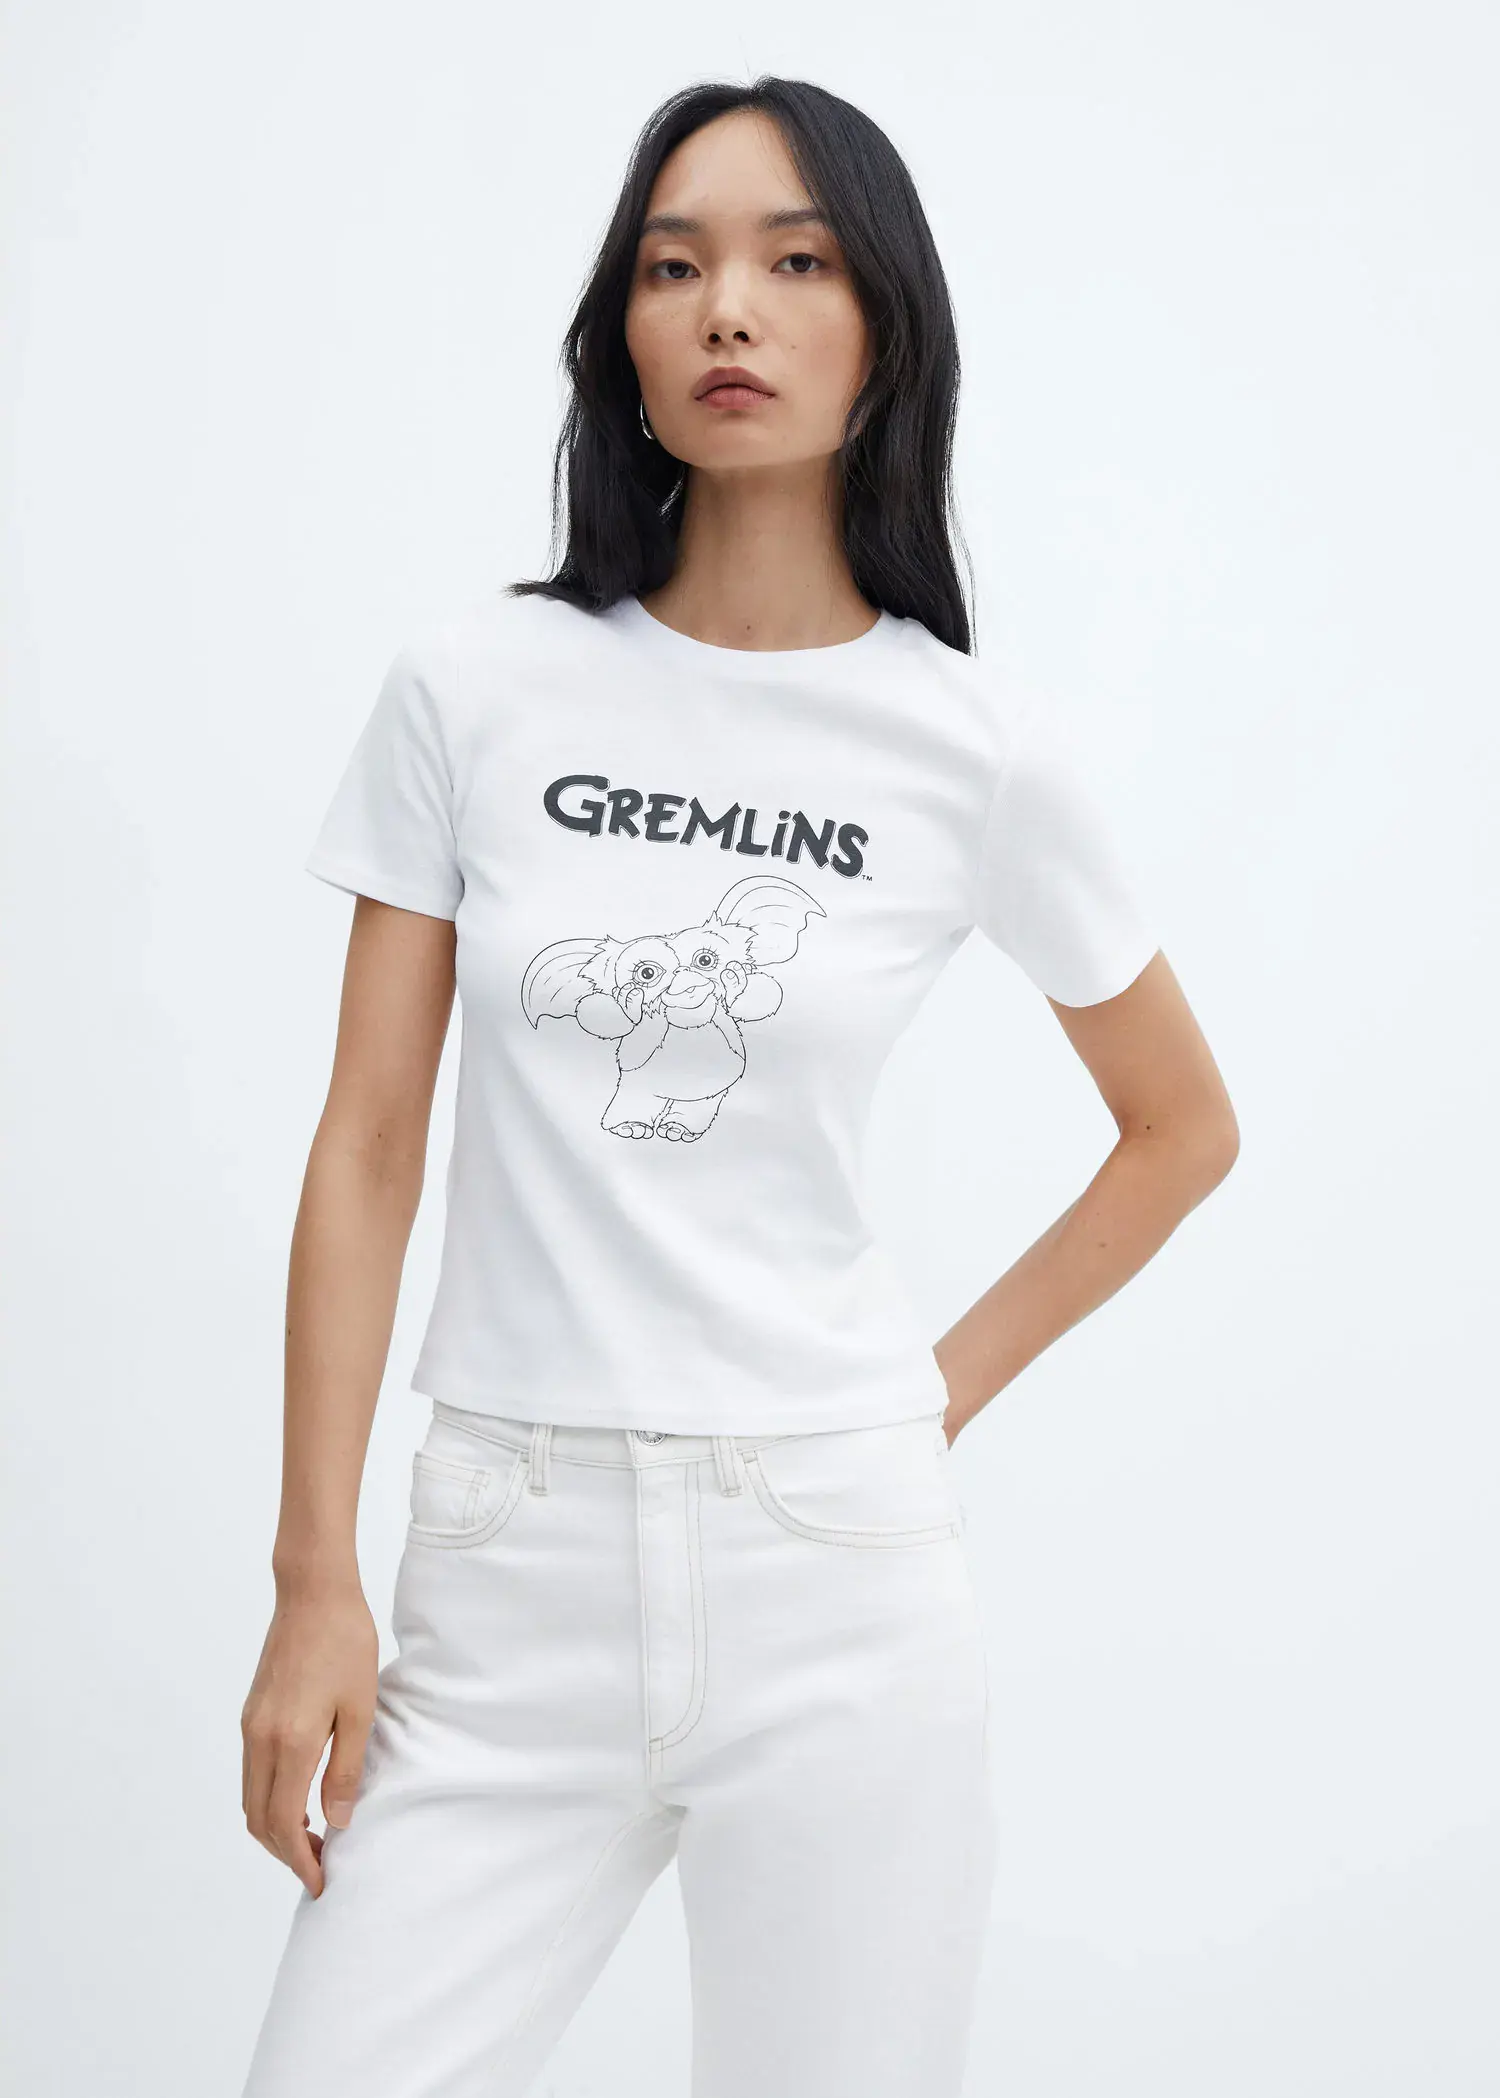 Mango T-shirt dos Gremlins. 2